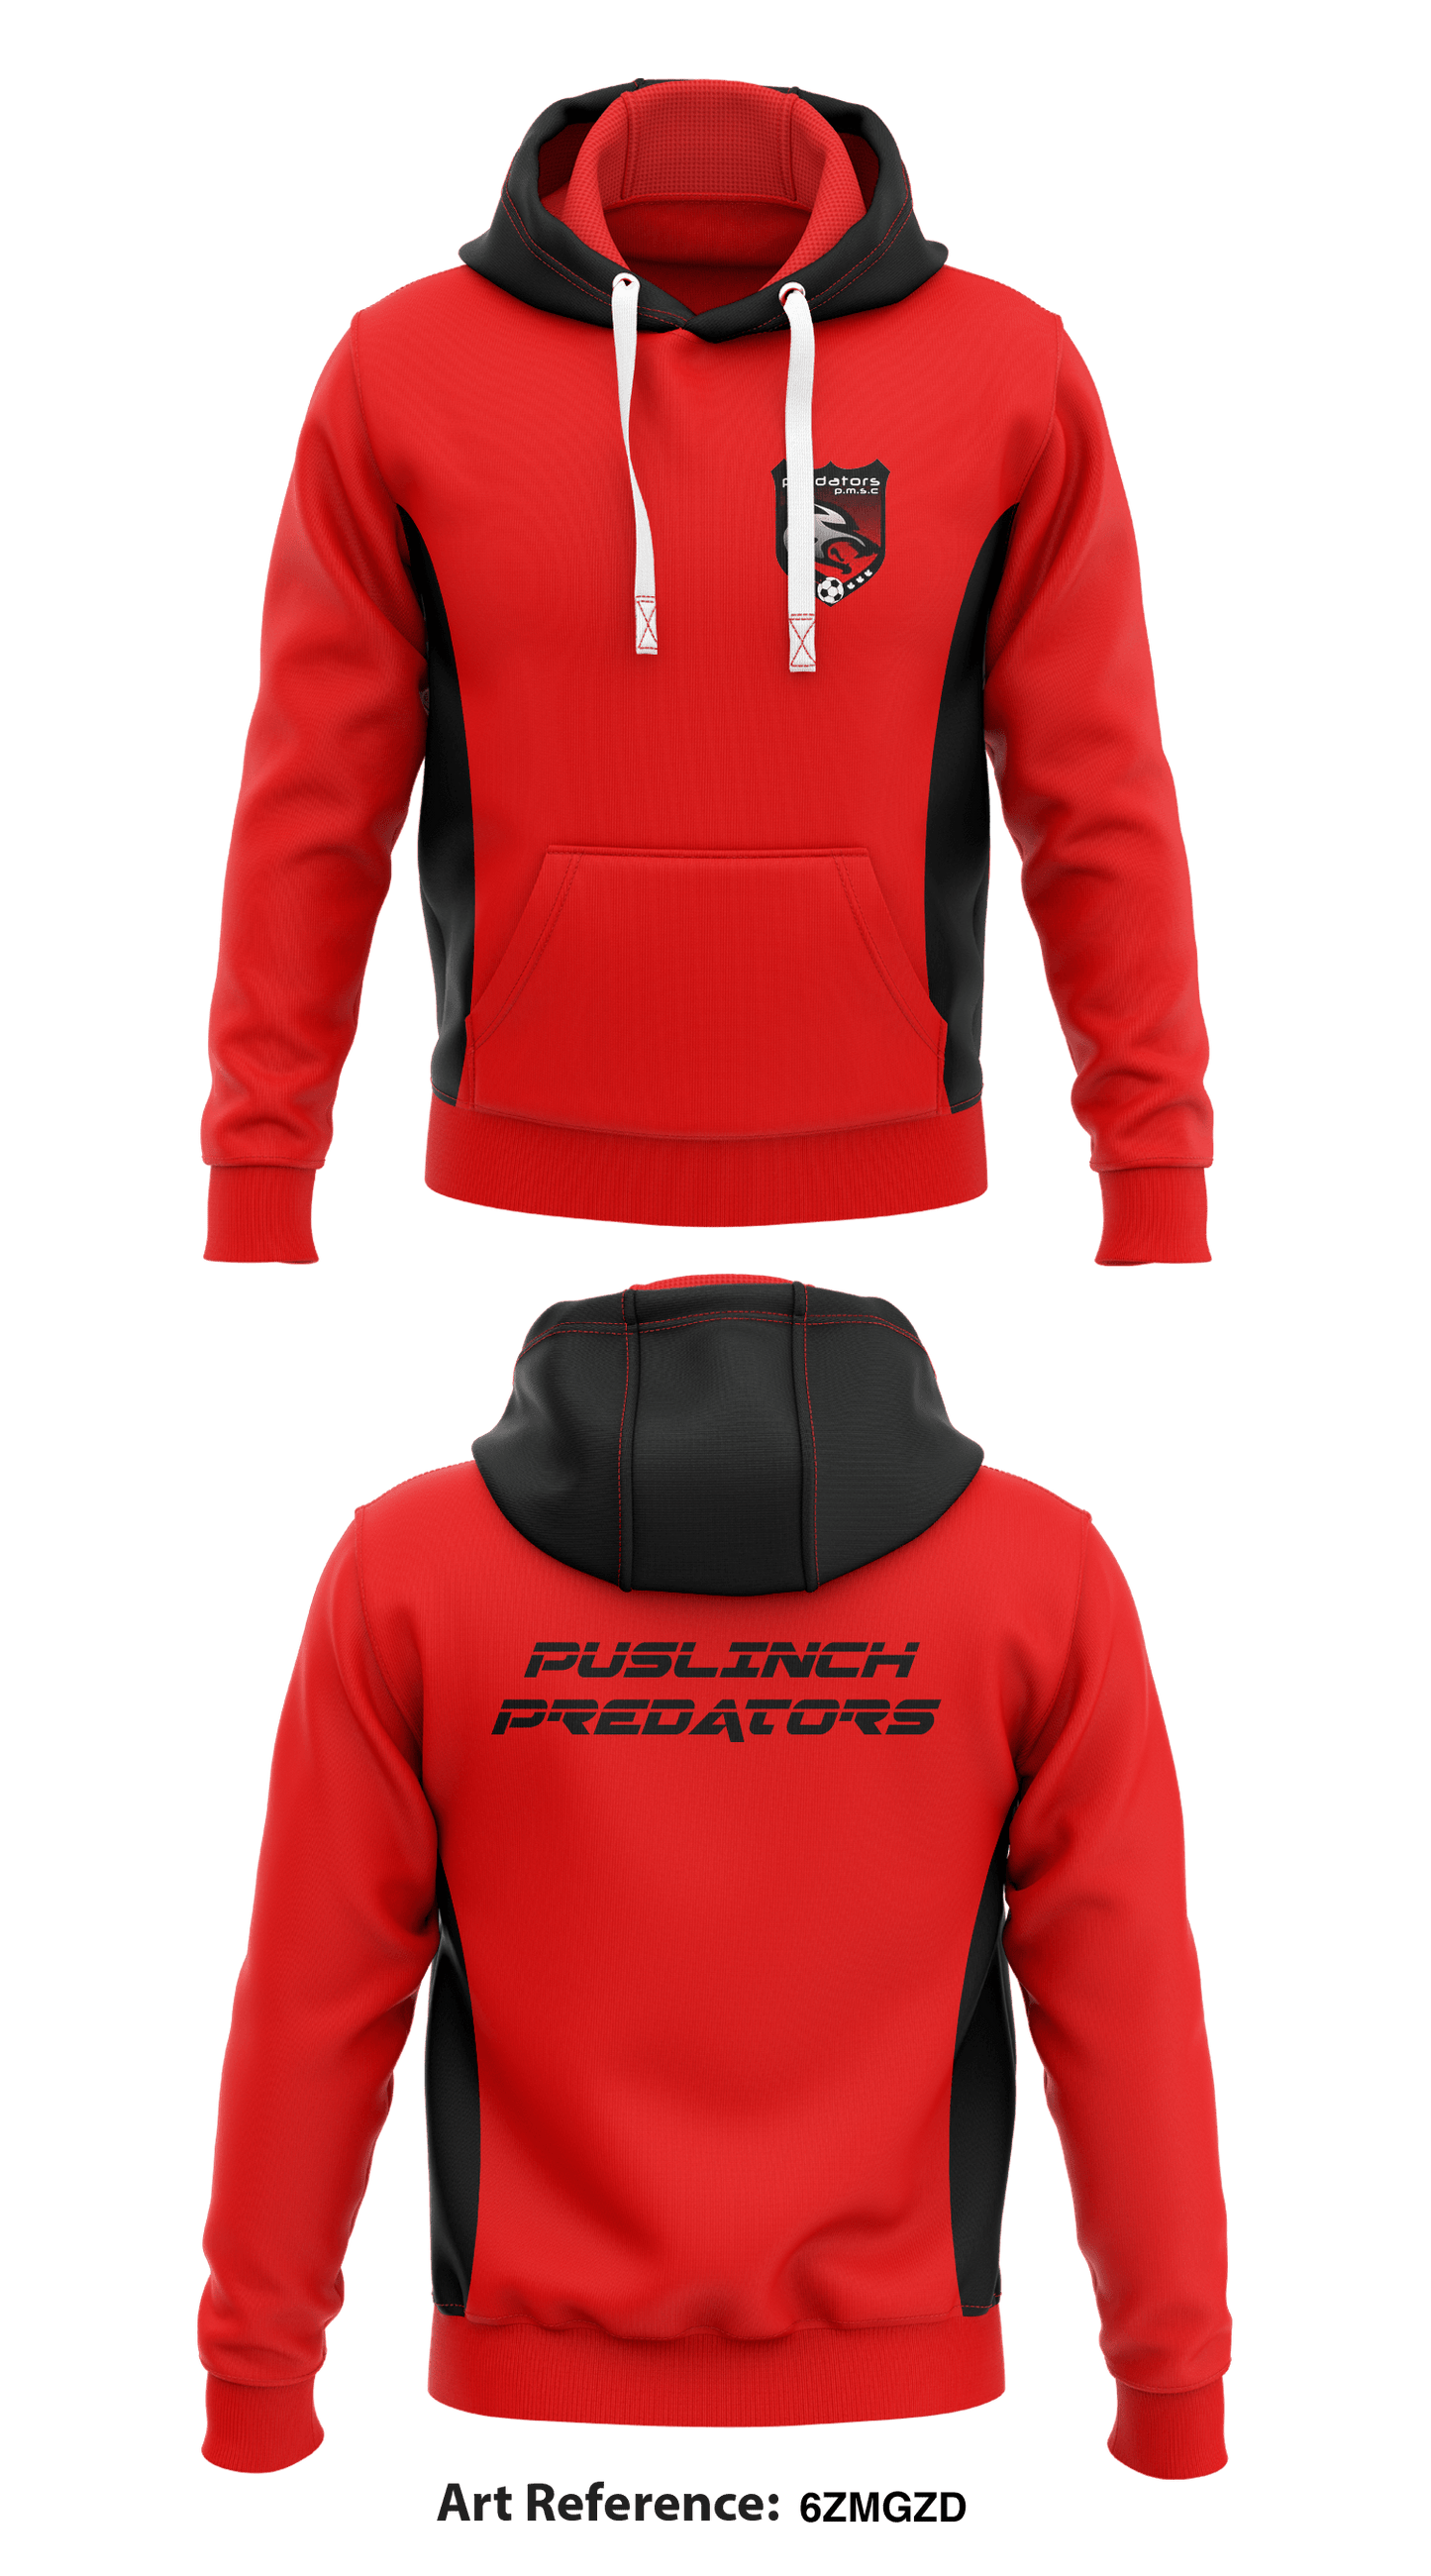 Puslinch Predators Store 1 Core Men's Hooded Performance Sweatshirt - 6zmgzd